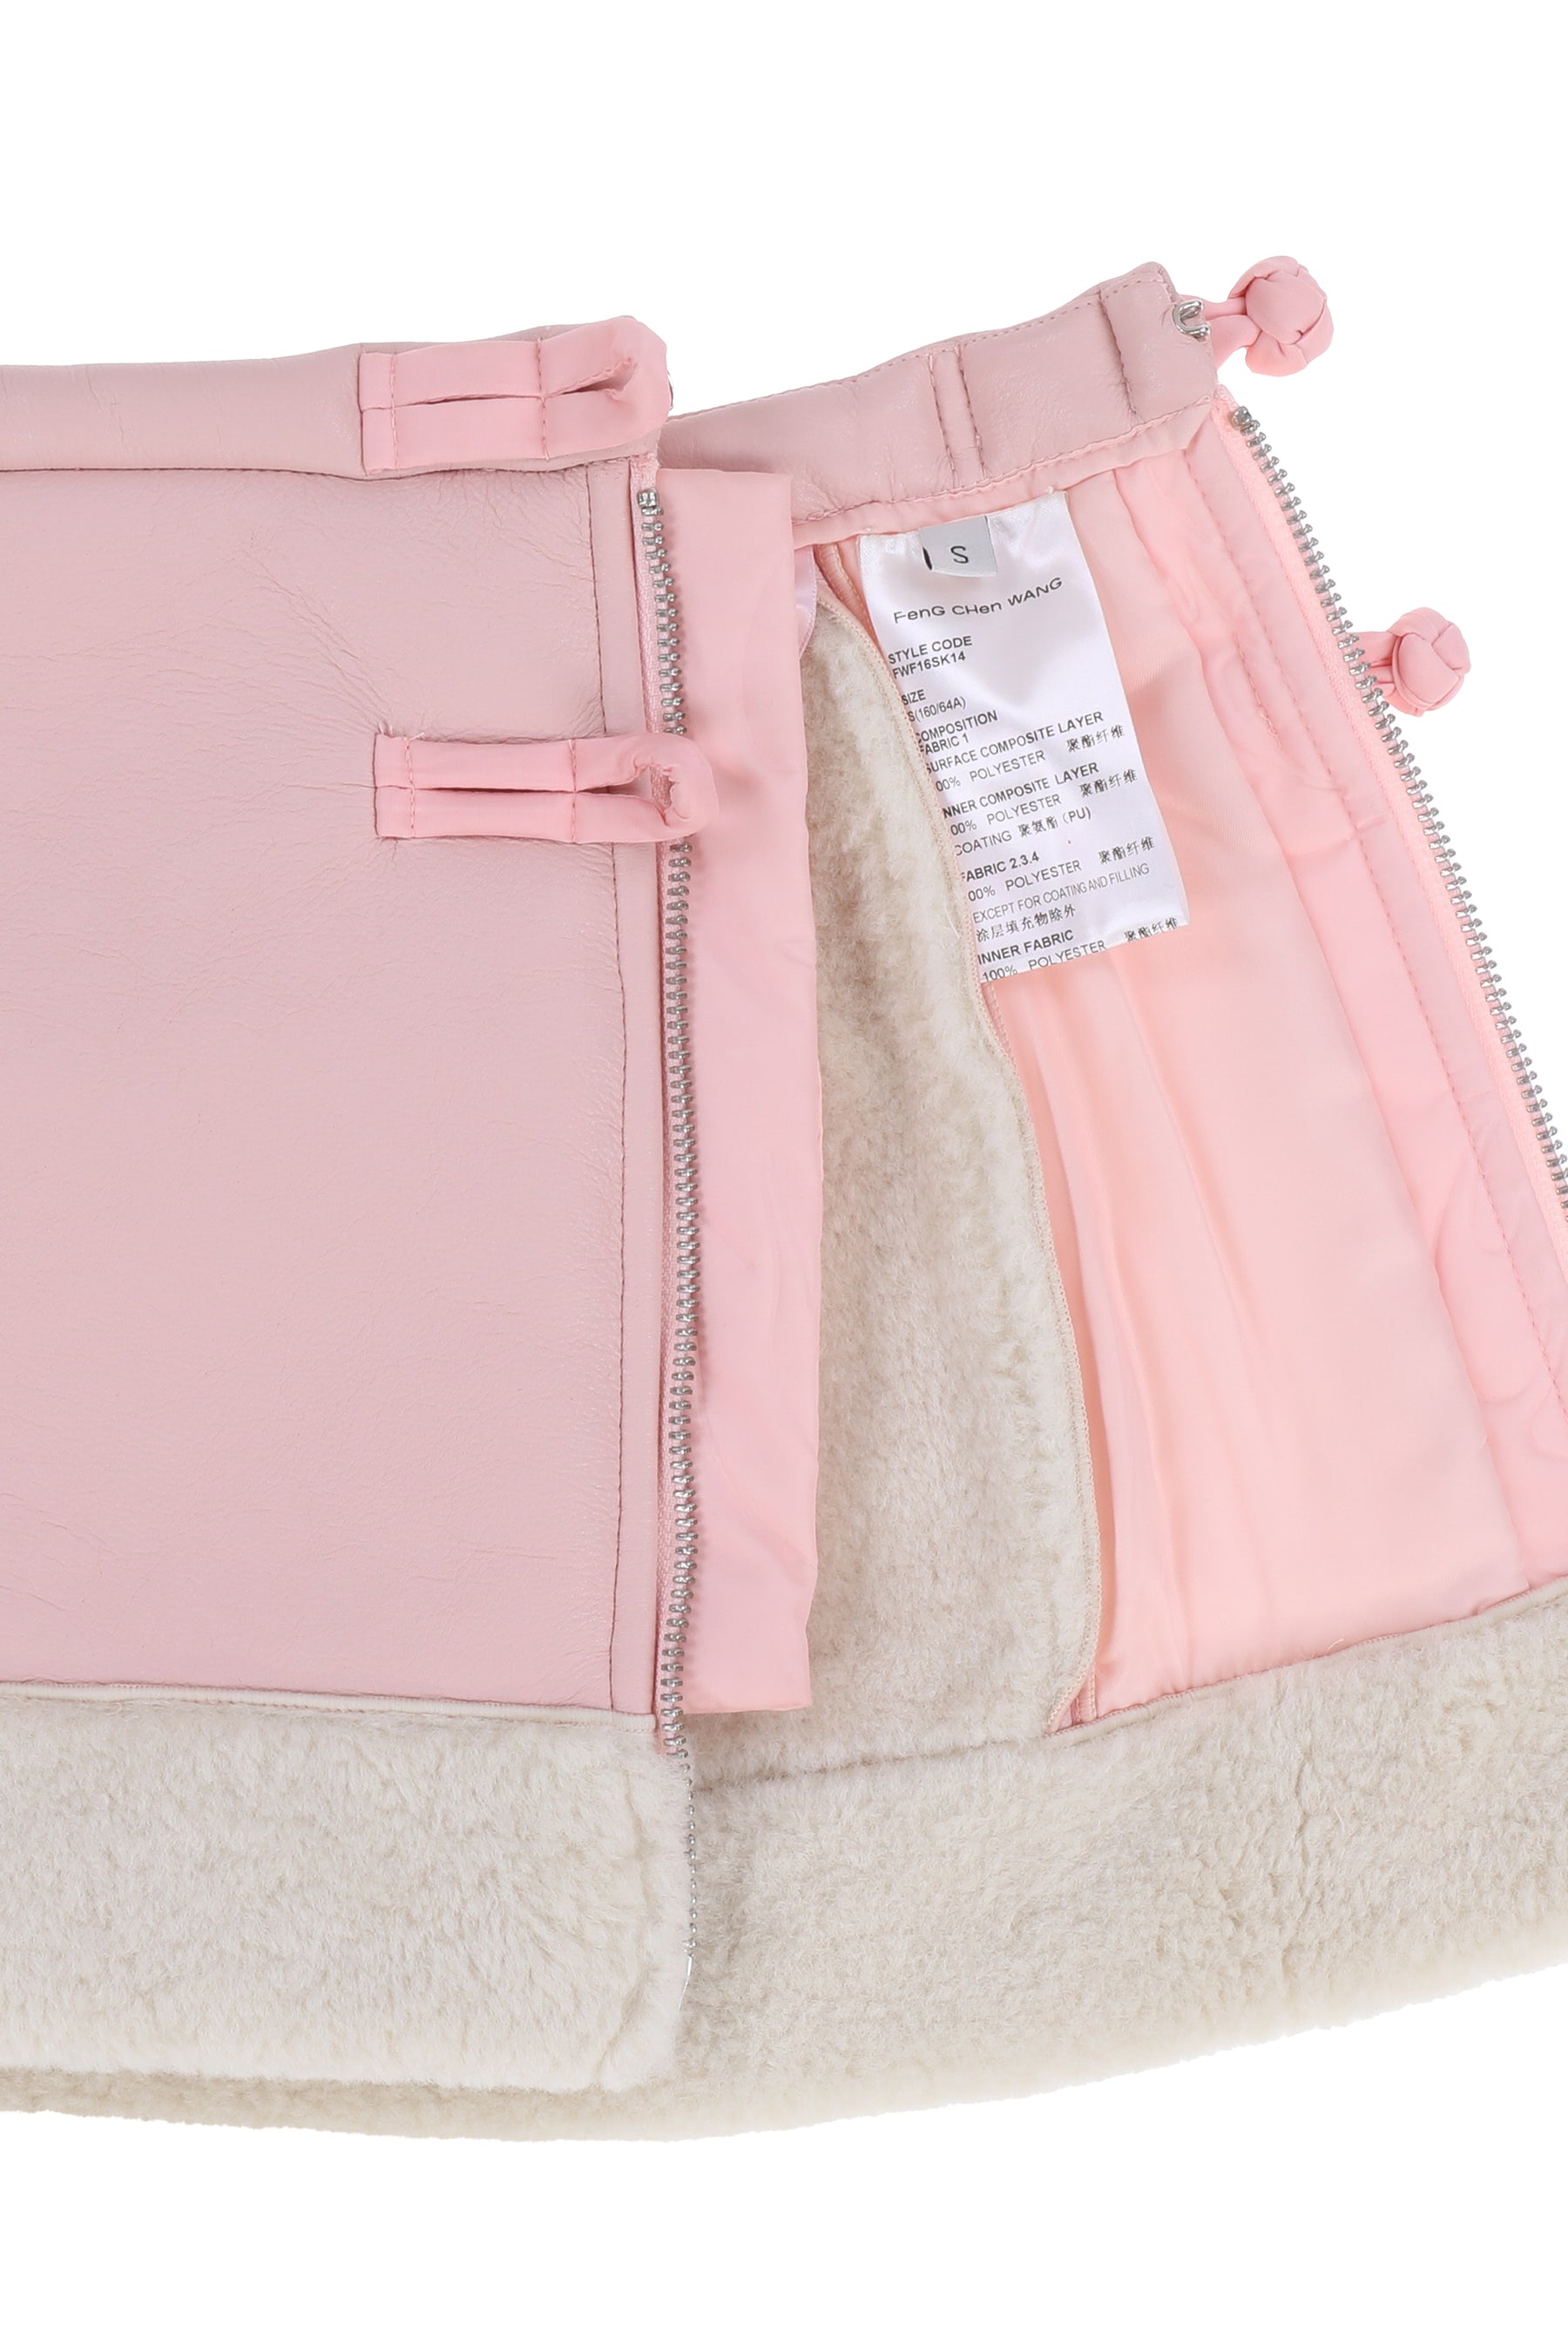 Feng Chen Wang Pheonix Mini Skirt Pink S